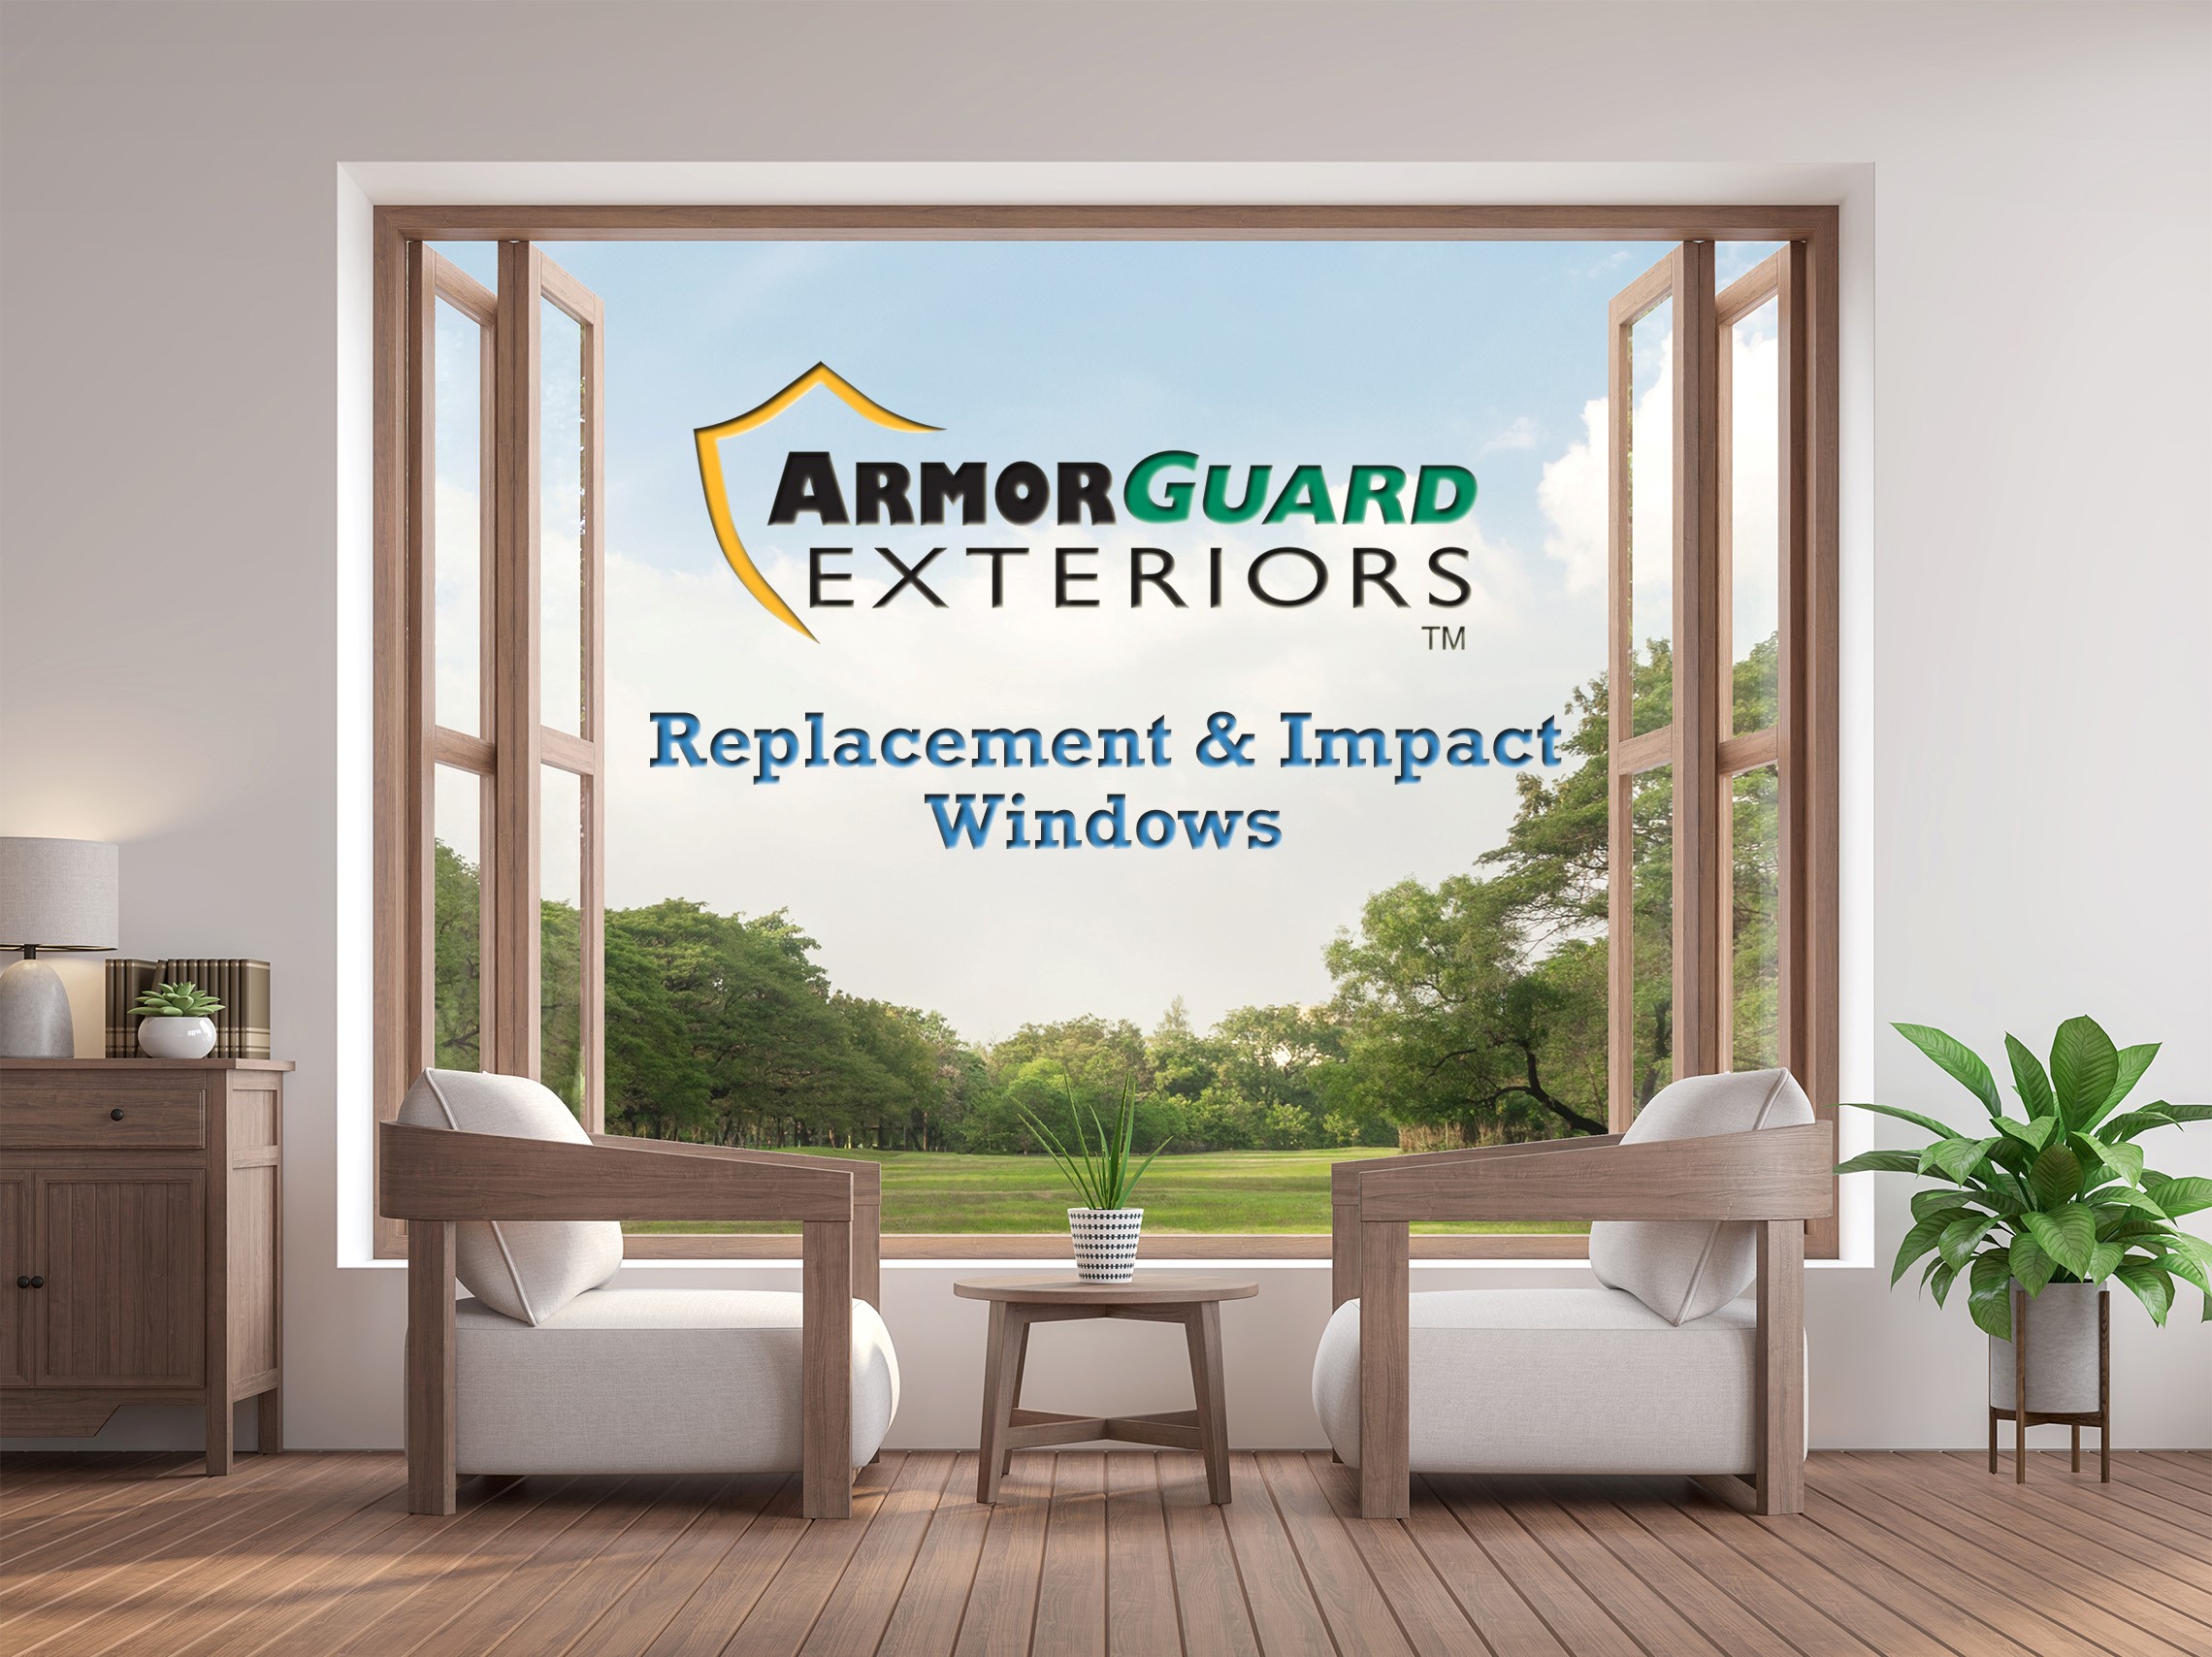 ArmorGuard offers hurricane-grade impact windows